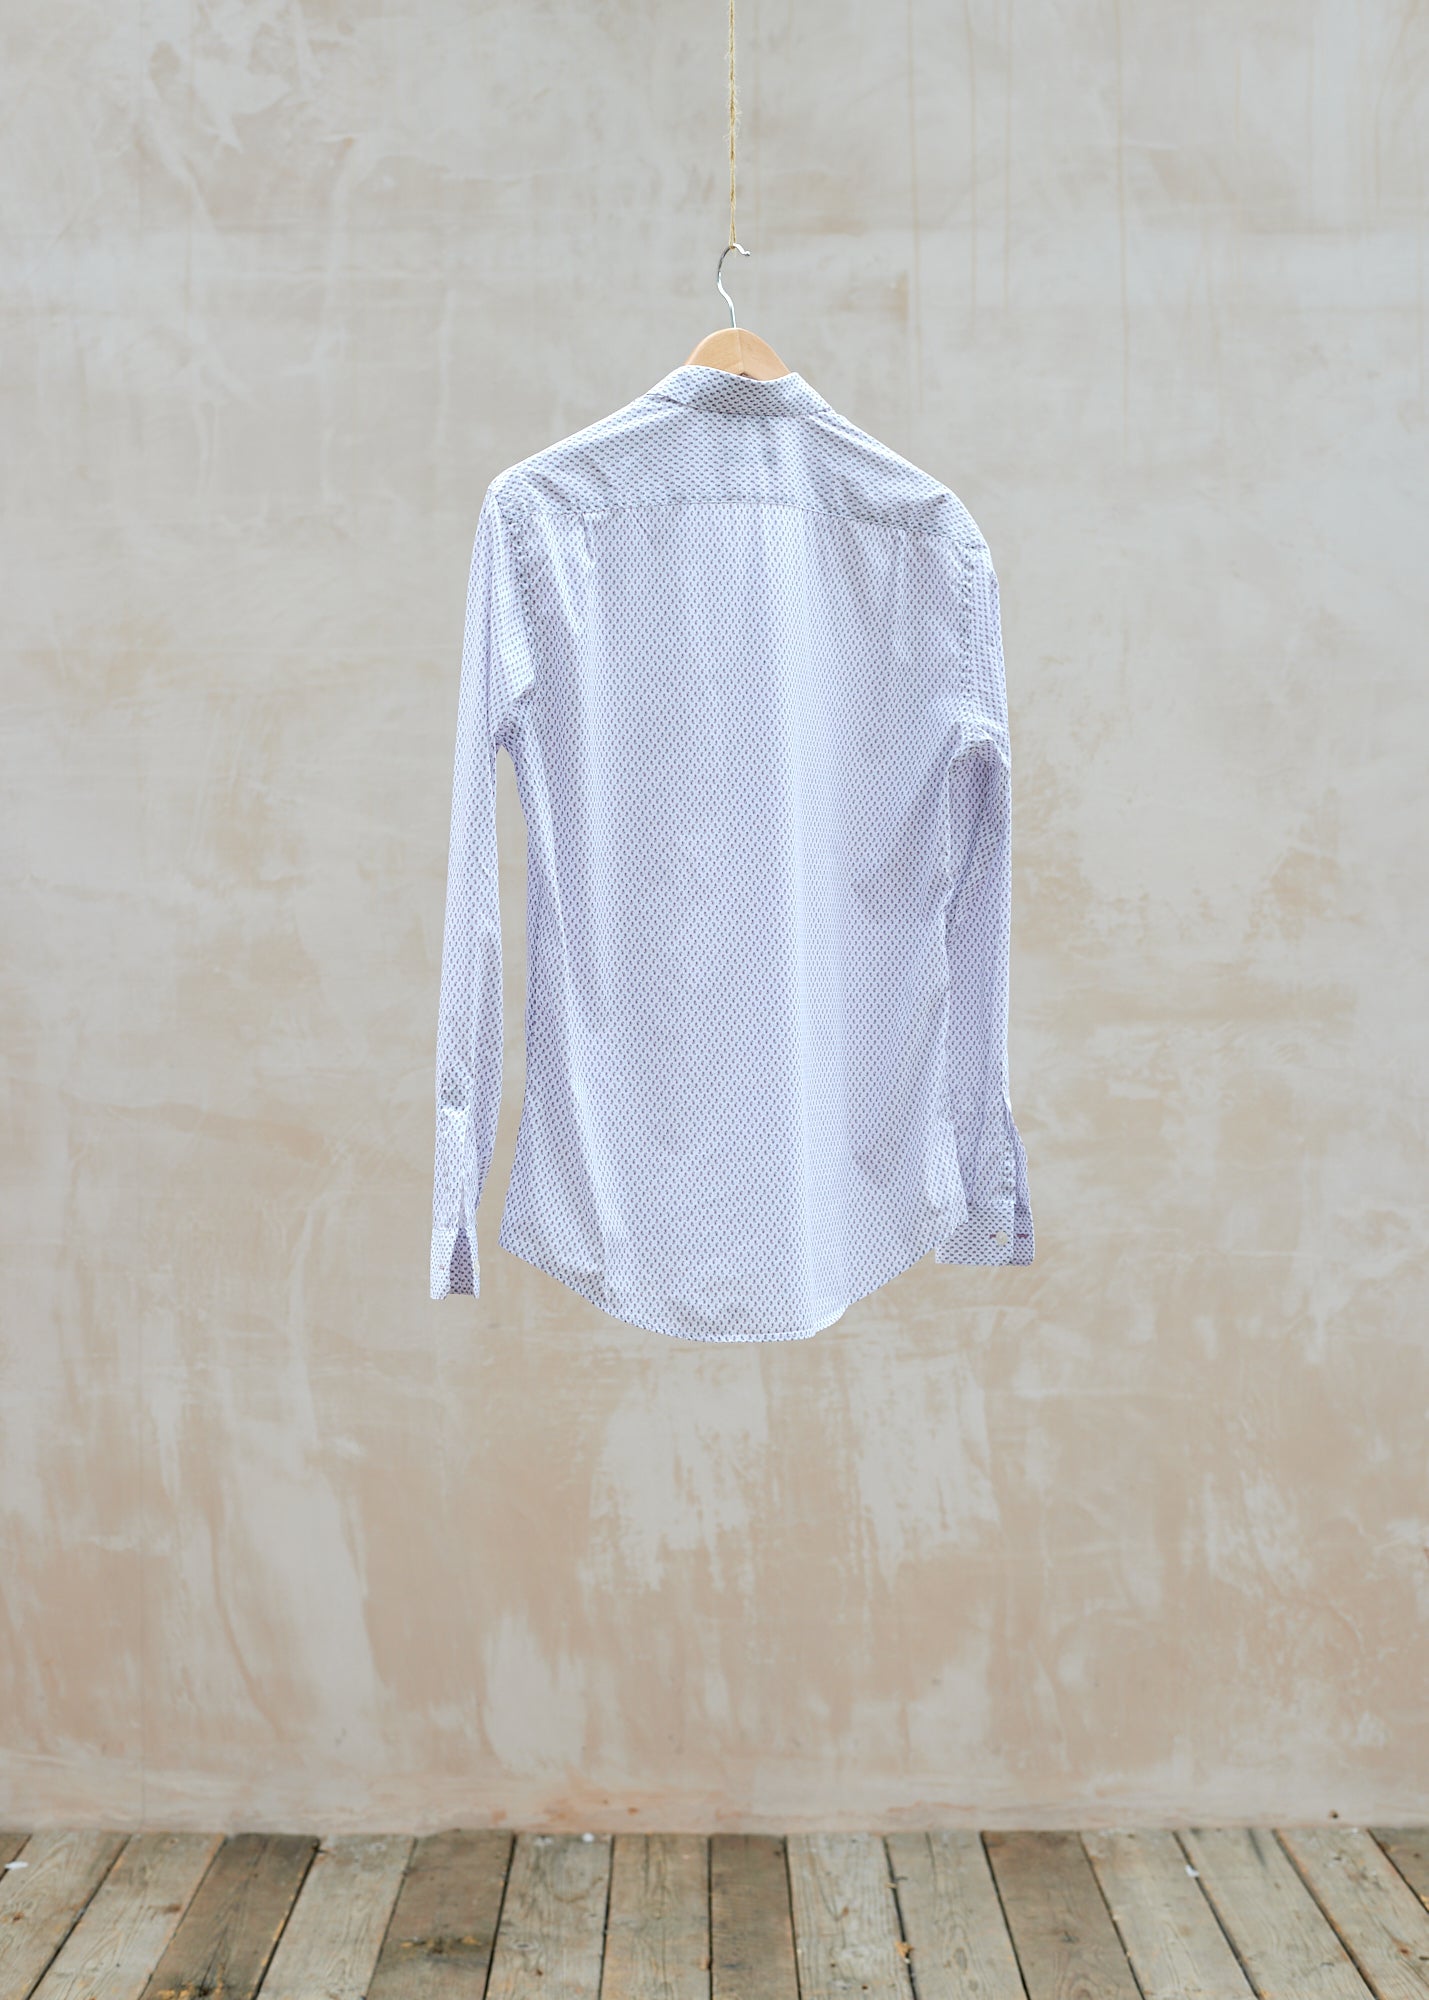 Paul Smith White Patterned Cotton Shirt - XL – Burford Garden Co.